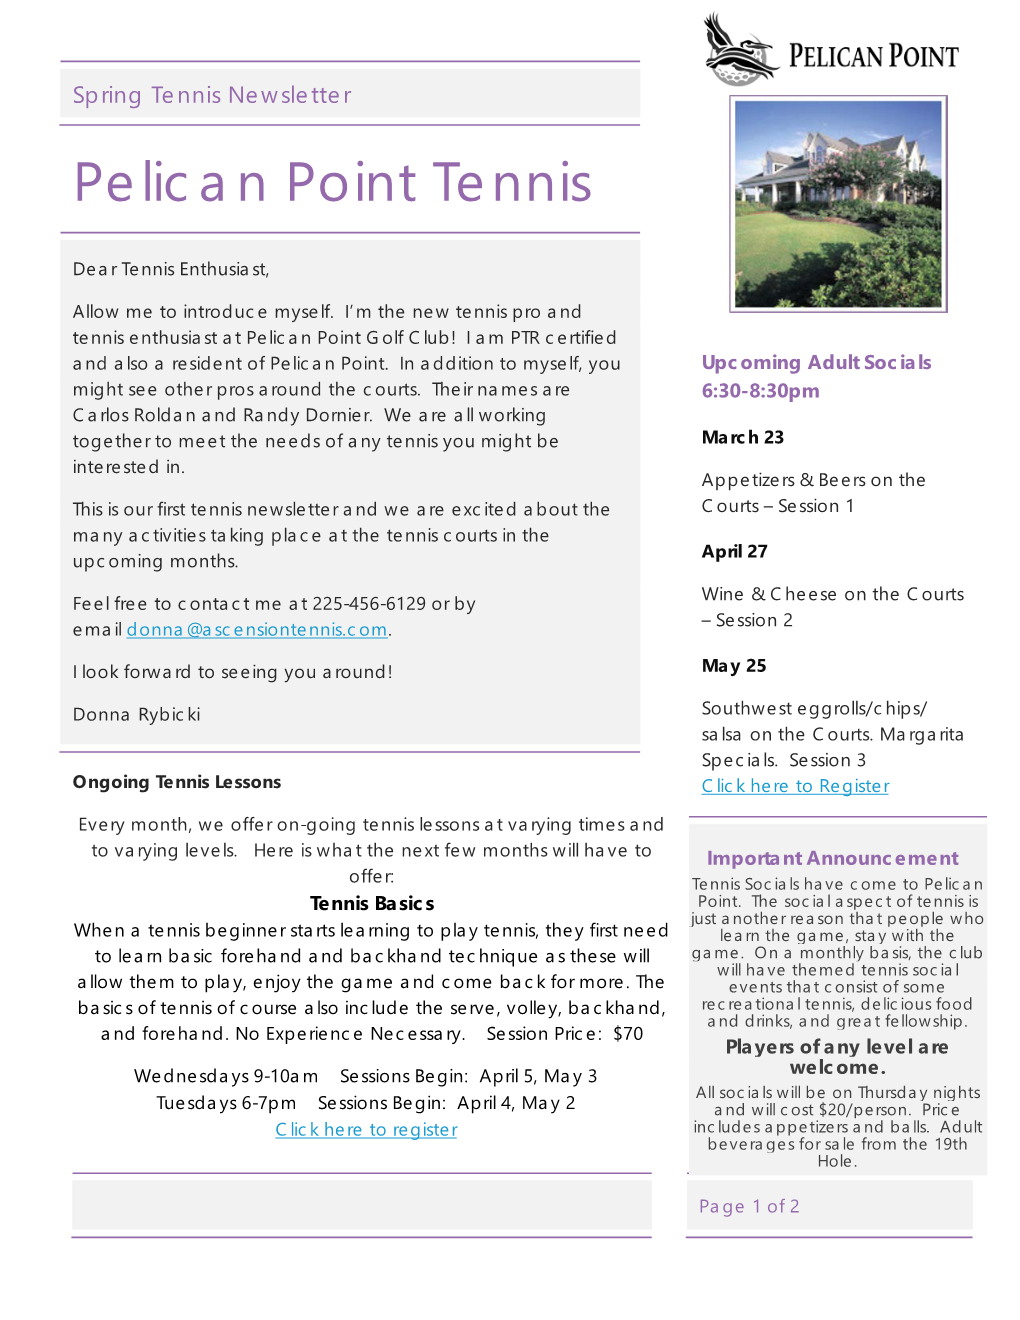 Pelican Point Tennis